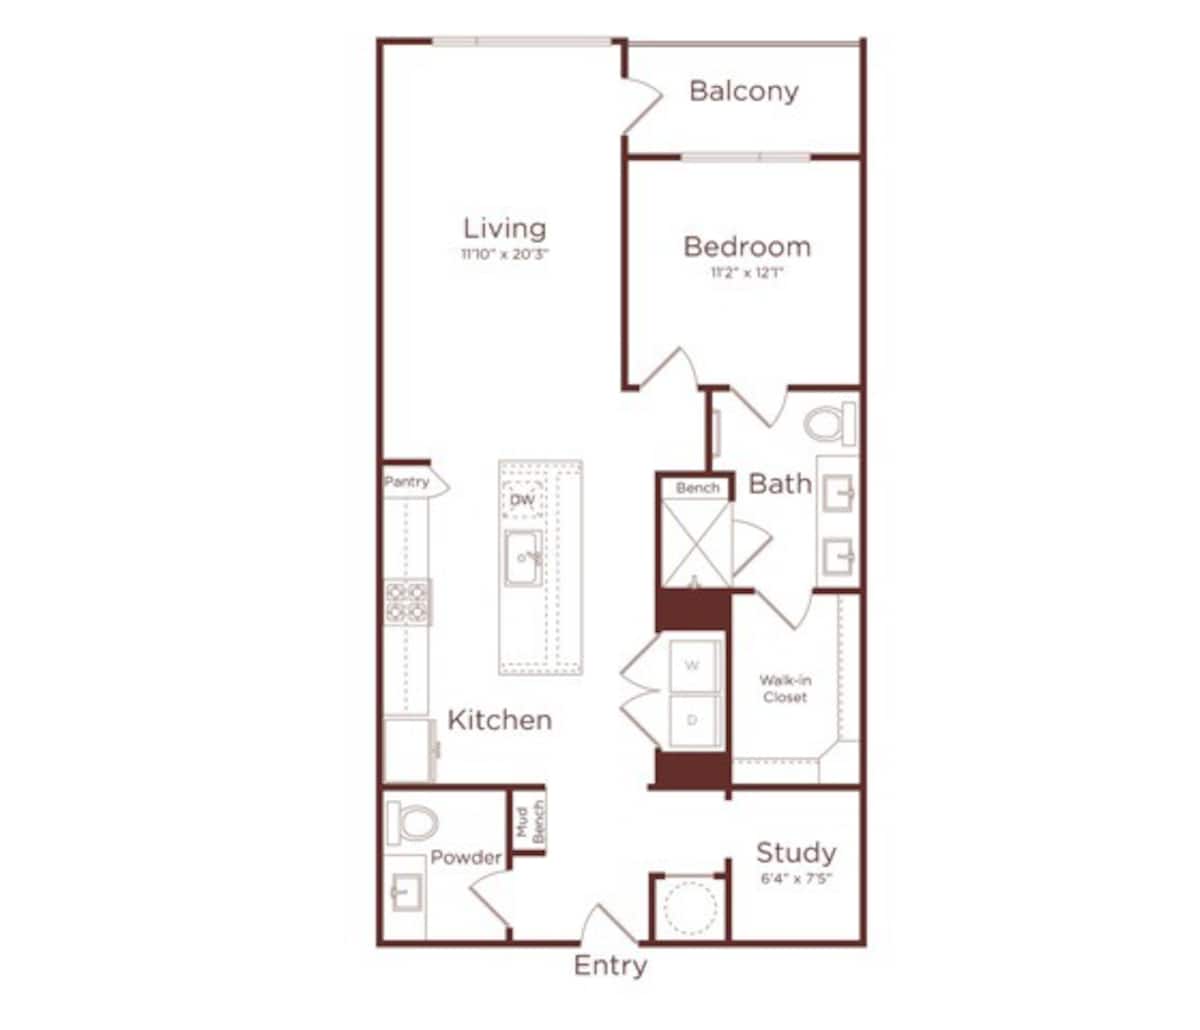 Floorplan diagram for A3B, showing 1 bedroom